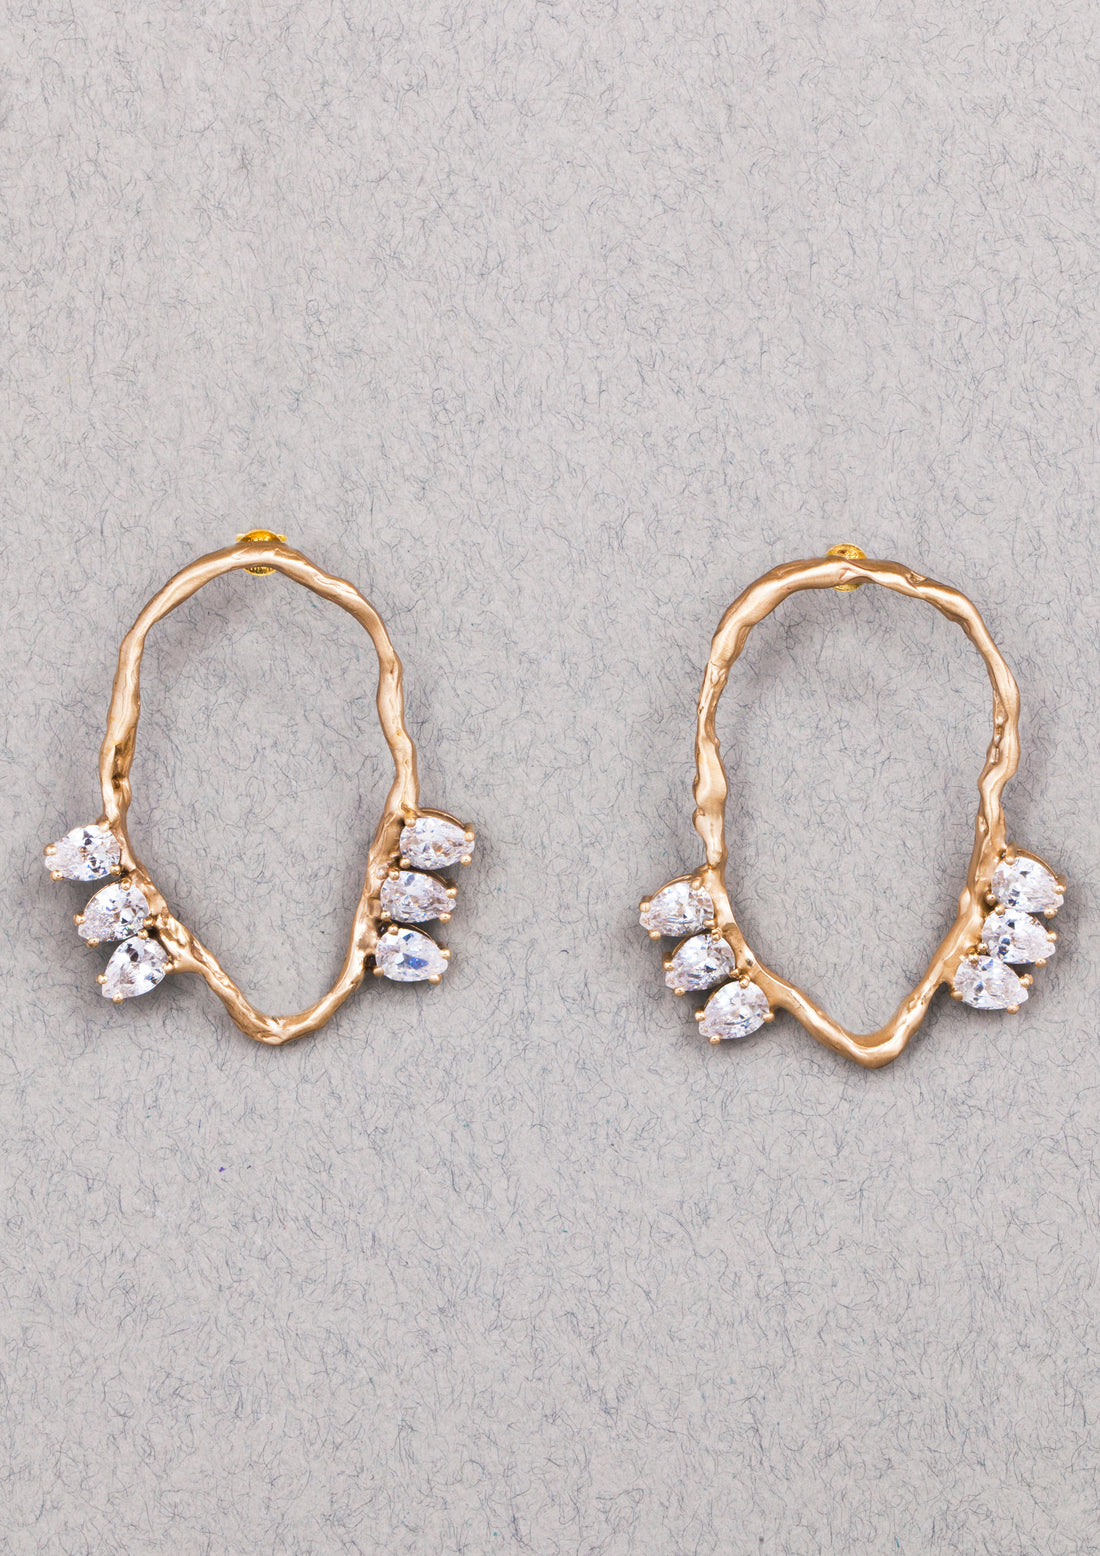 Dual Daphne earrings